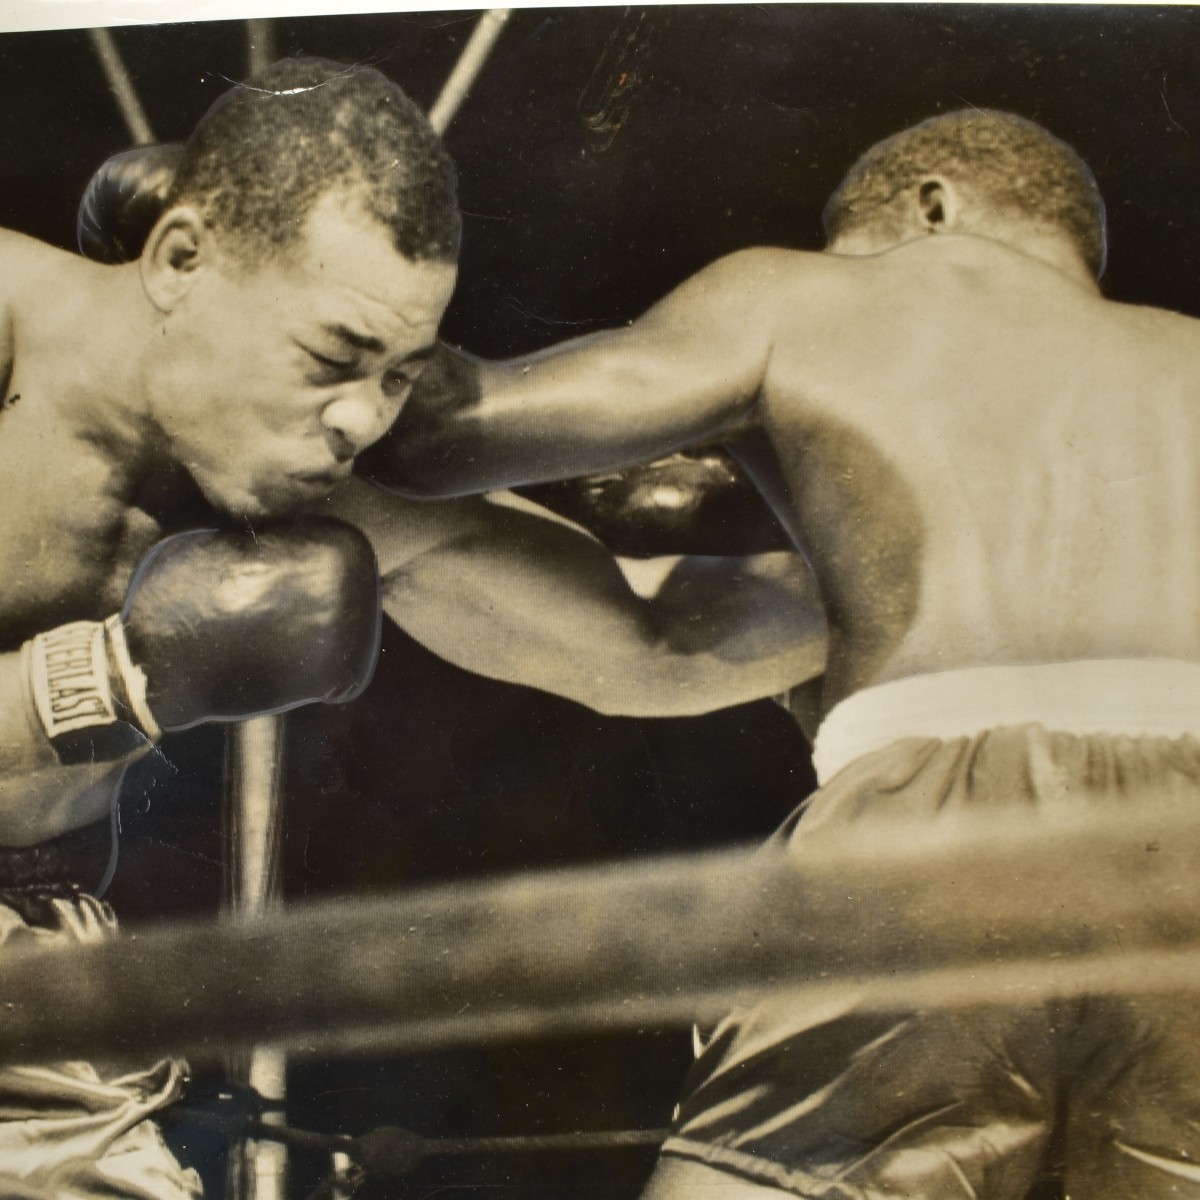 Six Boxing Photograph Memorabilia